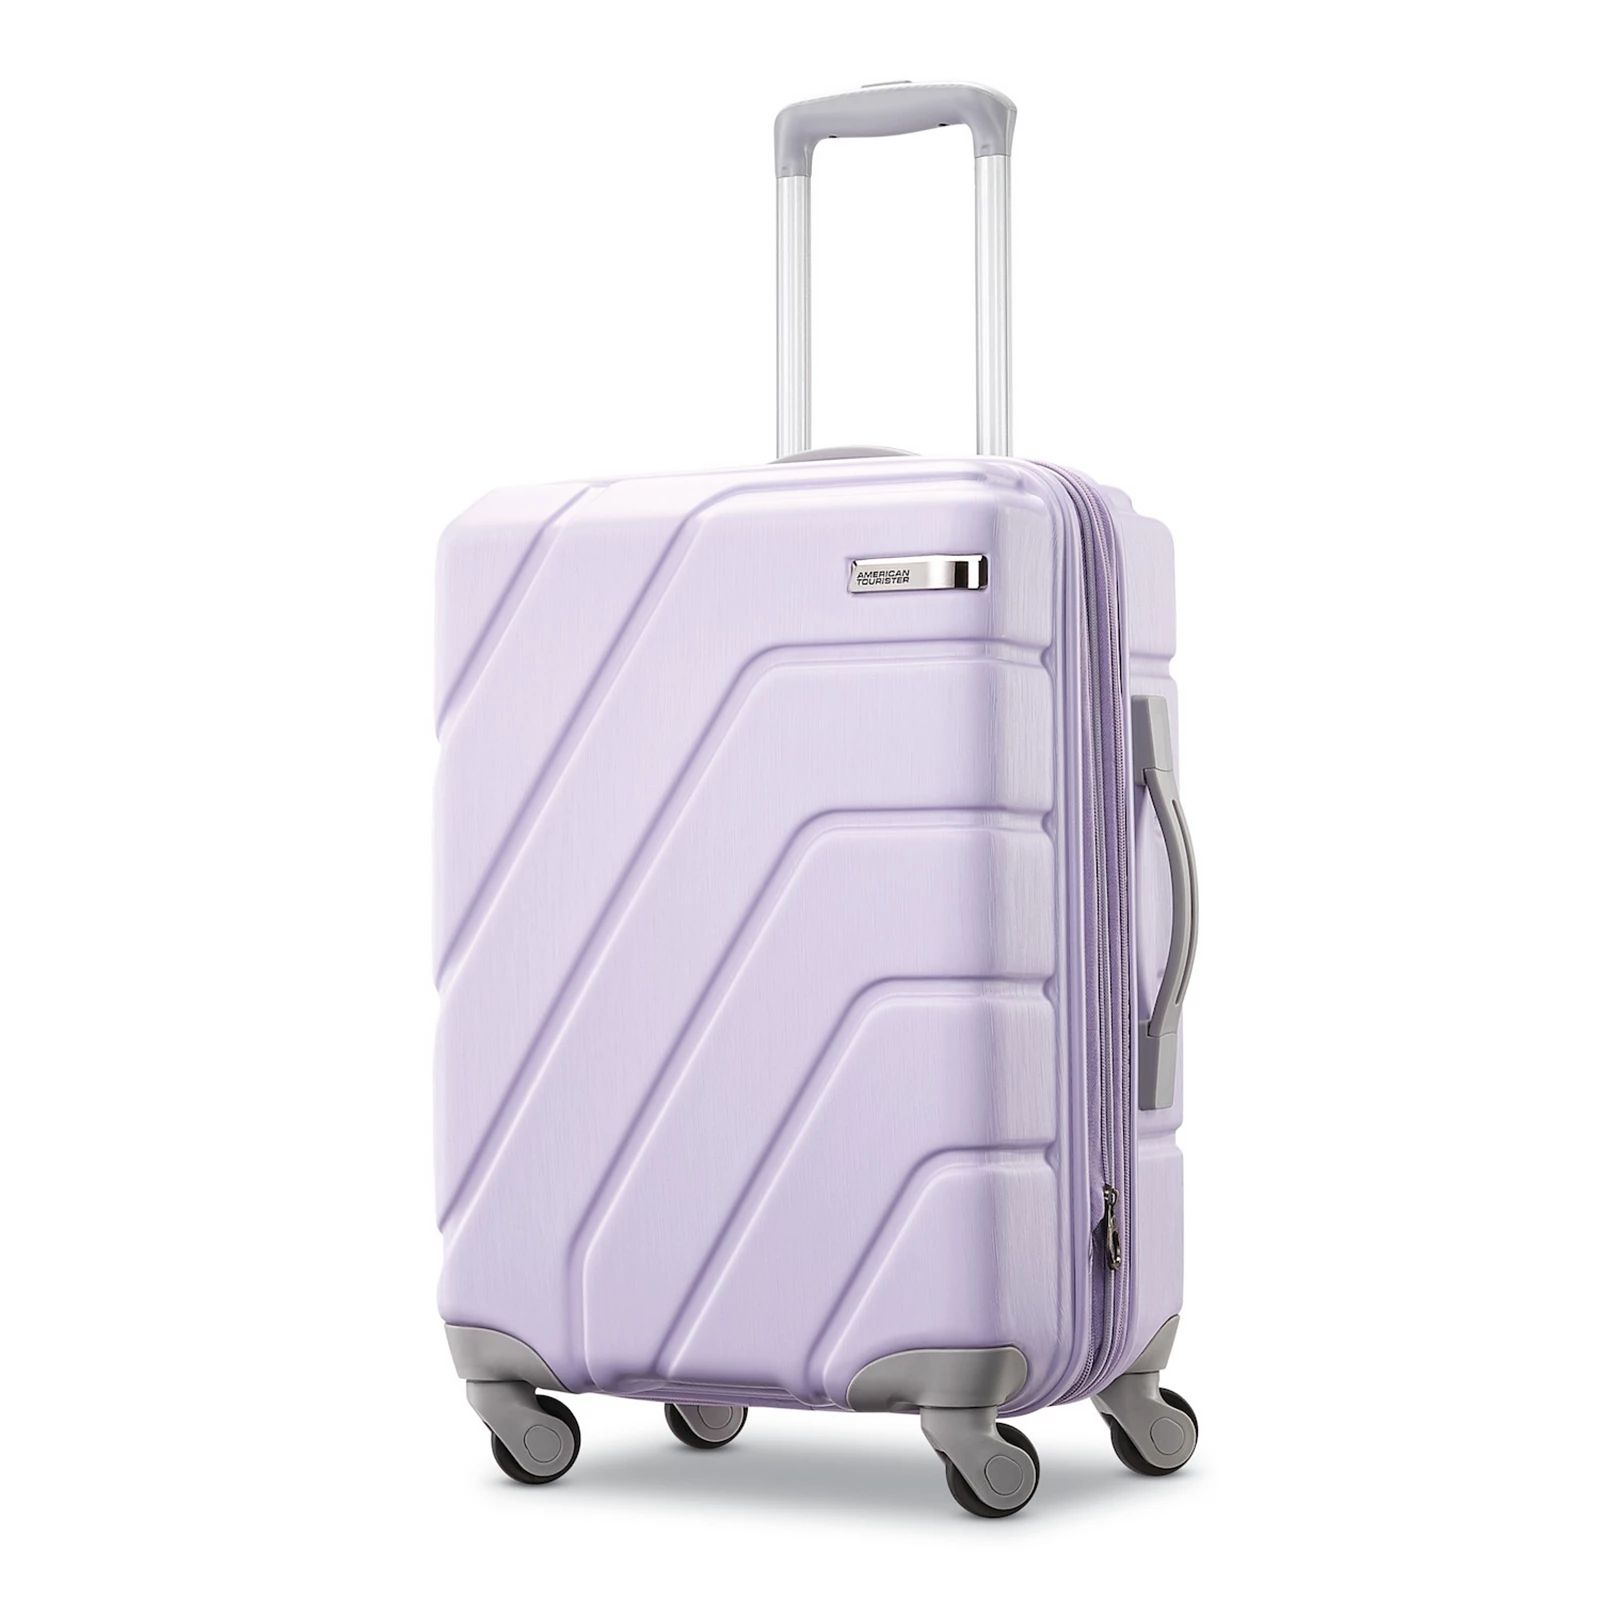 American Tourister Burst Trio Max Hardside Spinner Luggage, Lt Purple, 20 Carryon | Kohl's